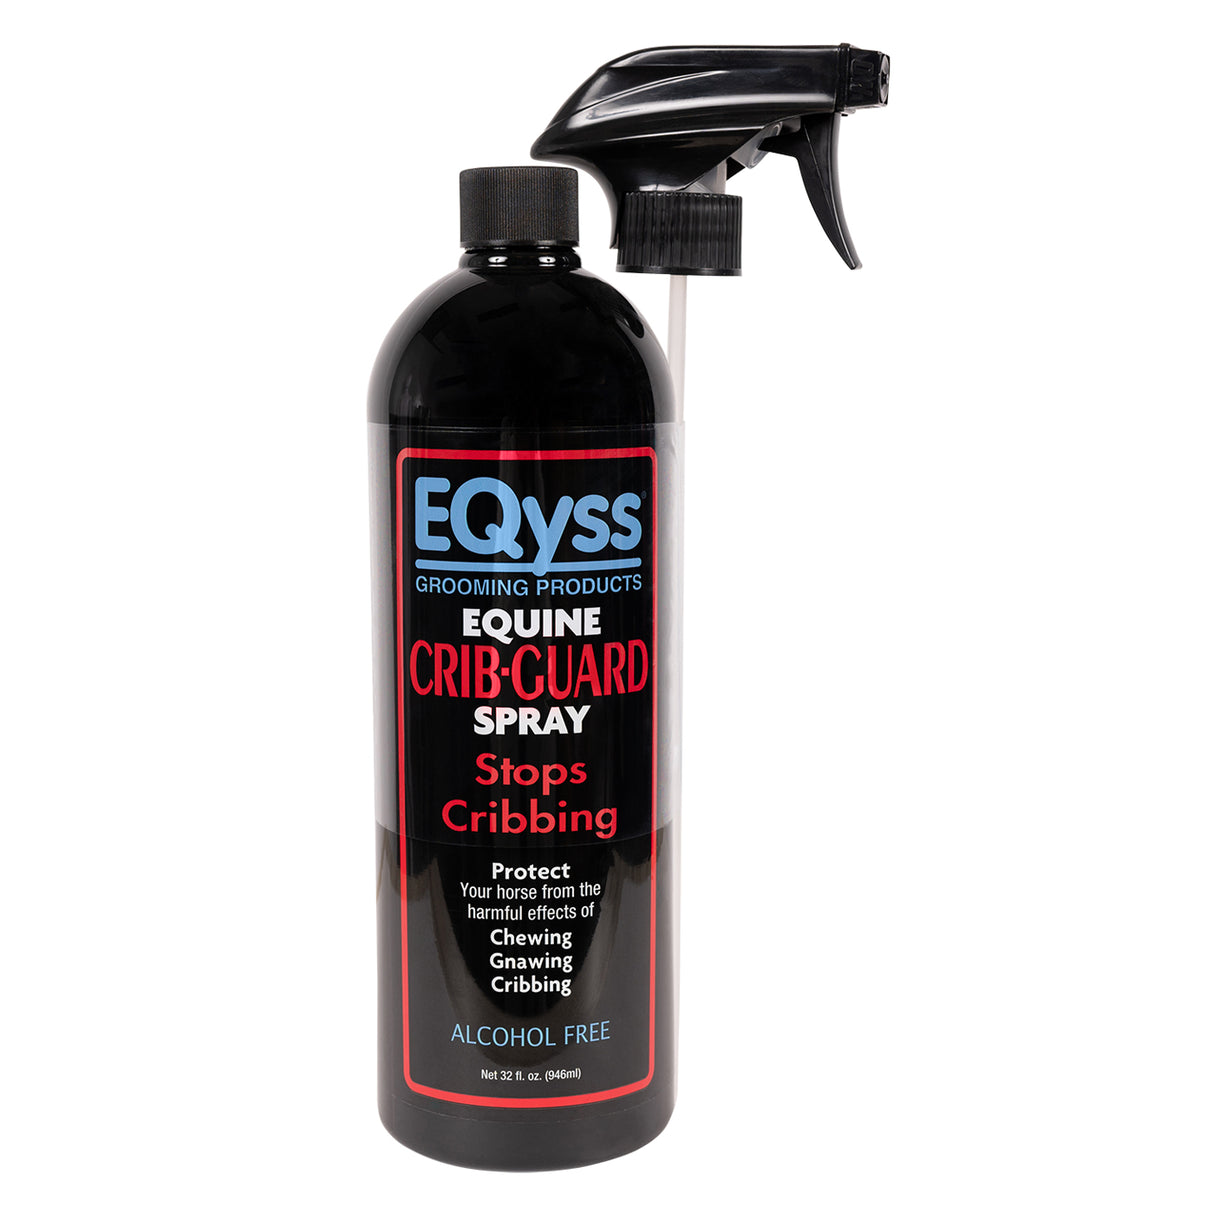 Eqyss Crib-Guard Spray 946 mL